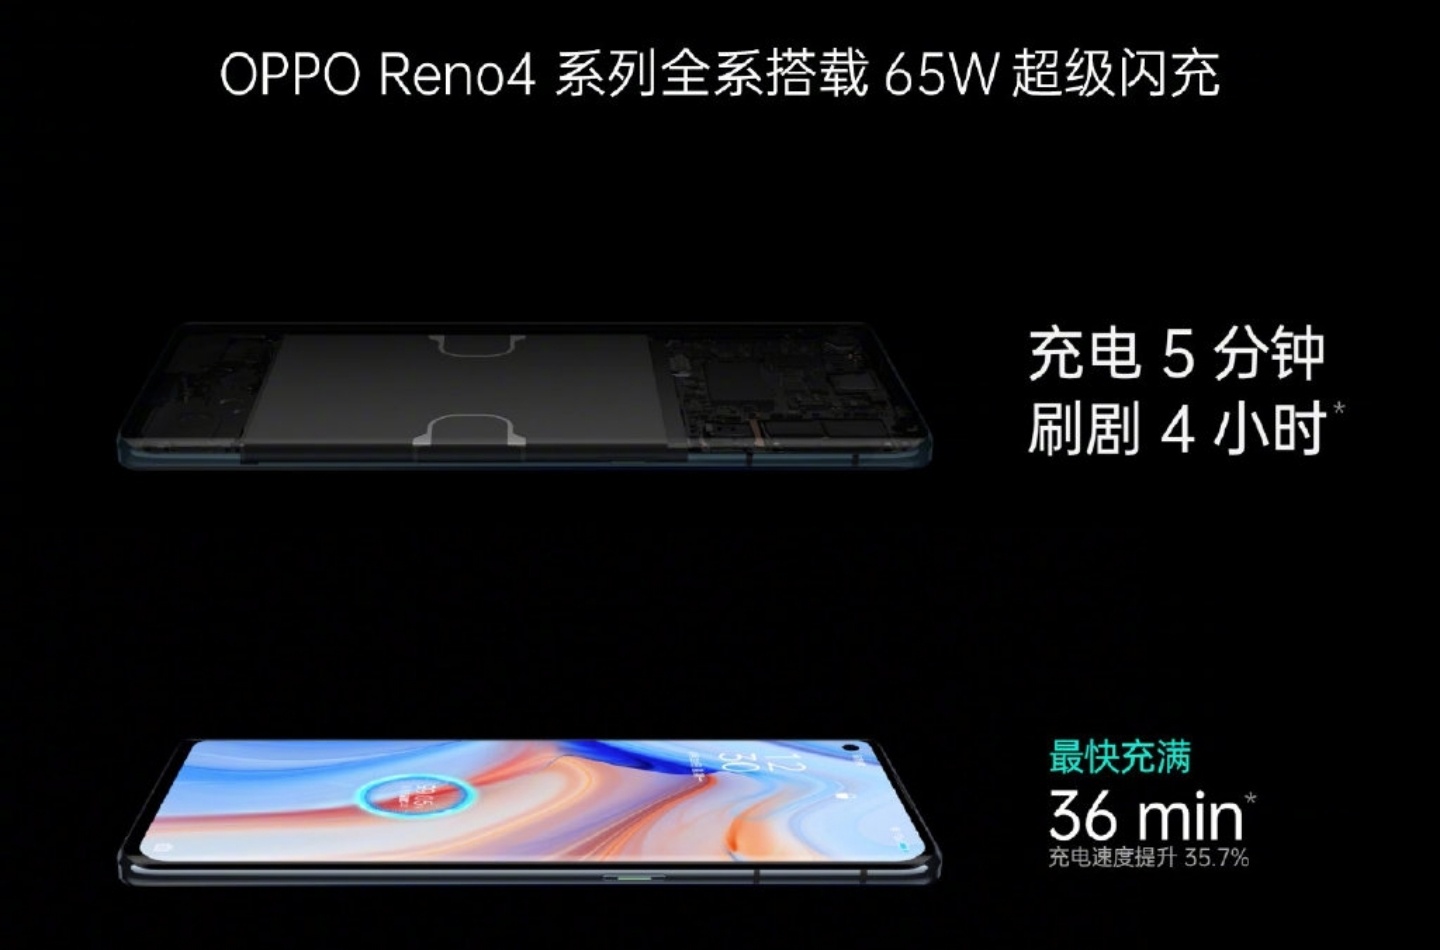 『 OPPO Reno4 』系列新機正式發表！支援超級夜景錄影模式、65W 超級閃充，顏色還超夏天！